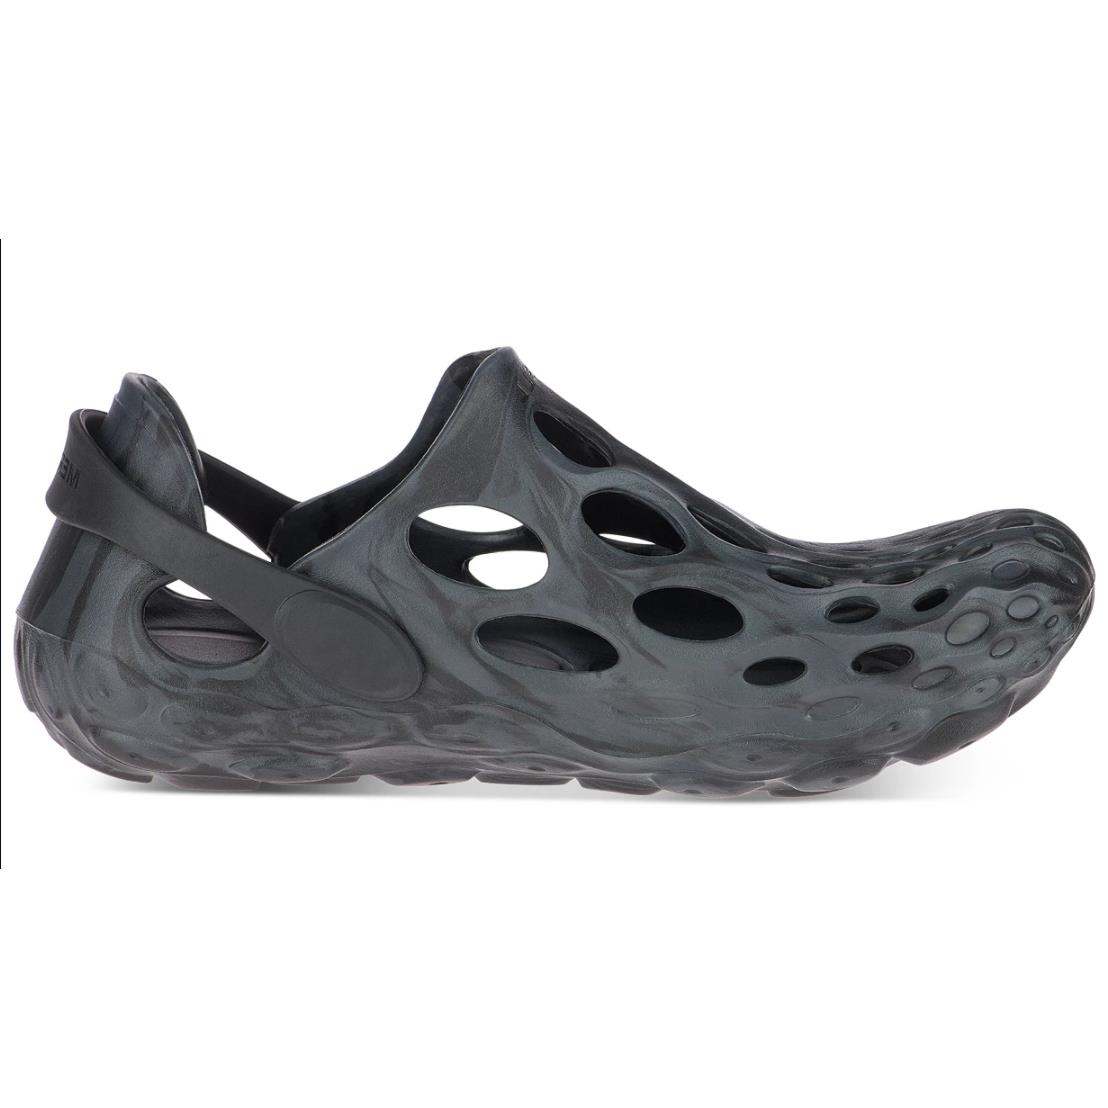 Merrell shoes Hydro Moc - Black 8